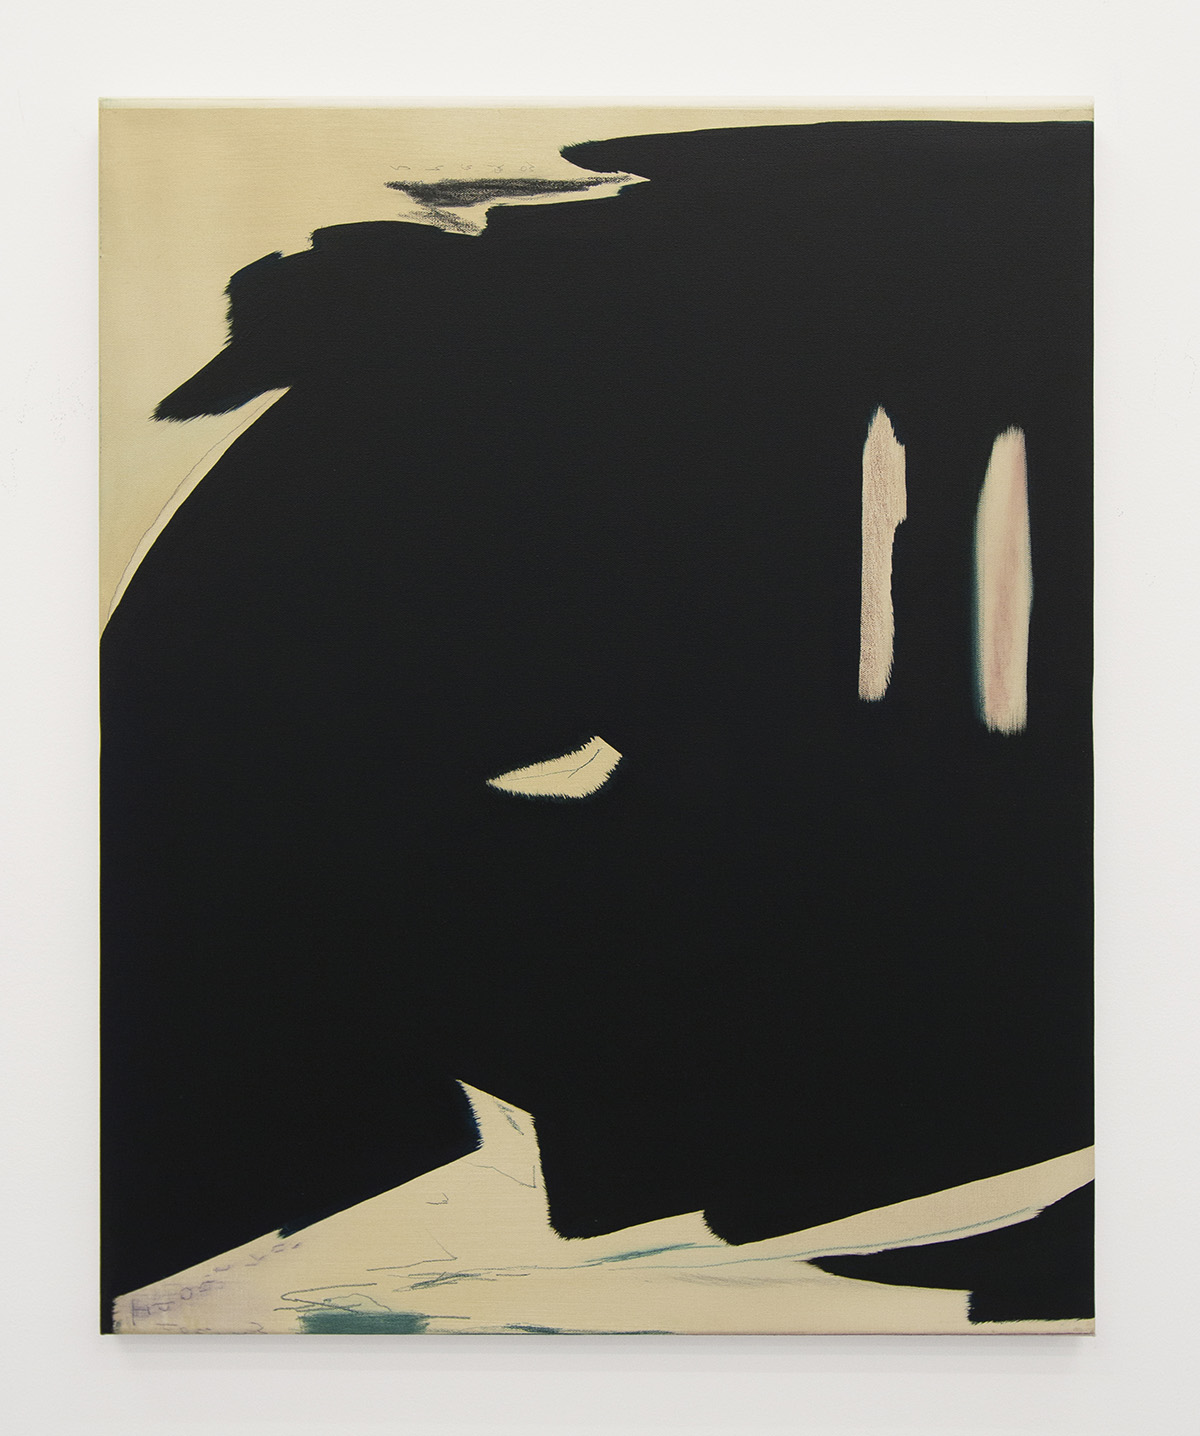 Shi Jiayun, Black #3, 2018, oil on canvas, 76.2 x 60.9 cm, 30 x 24 in.